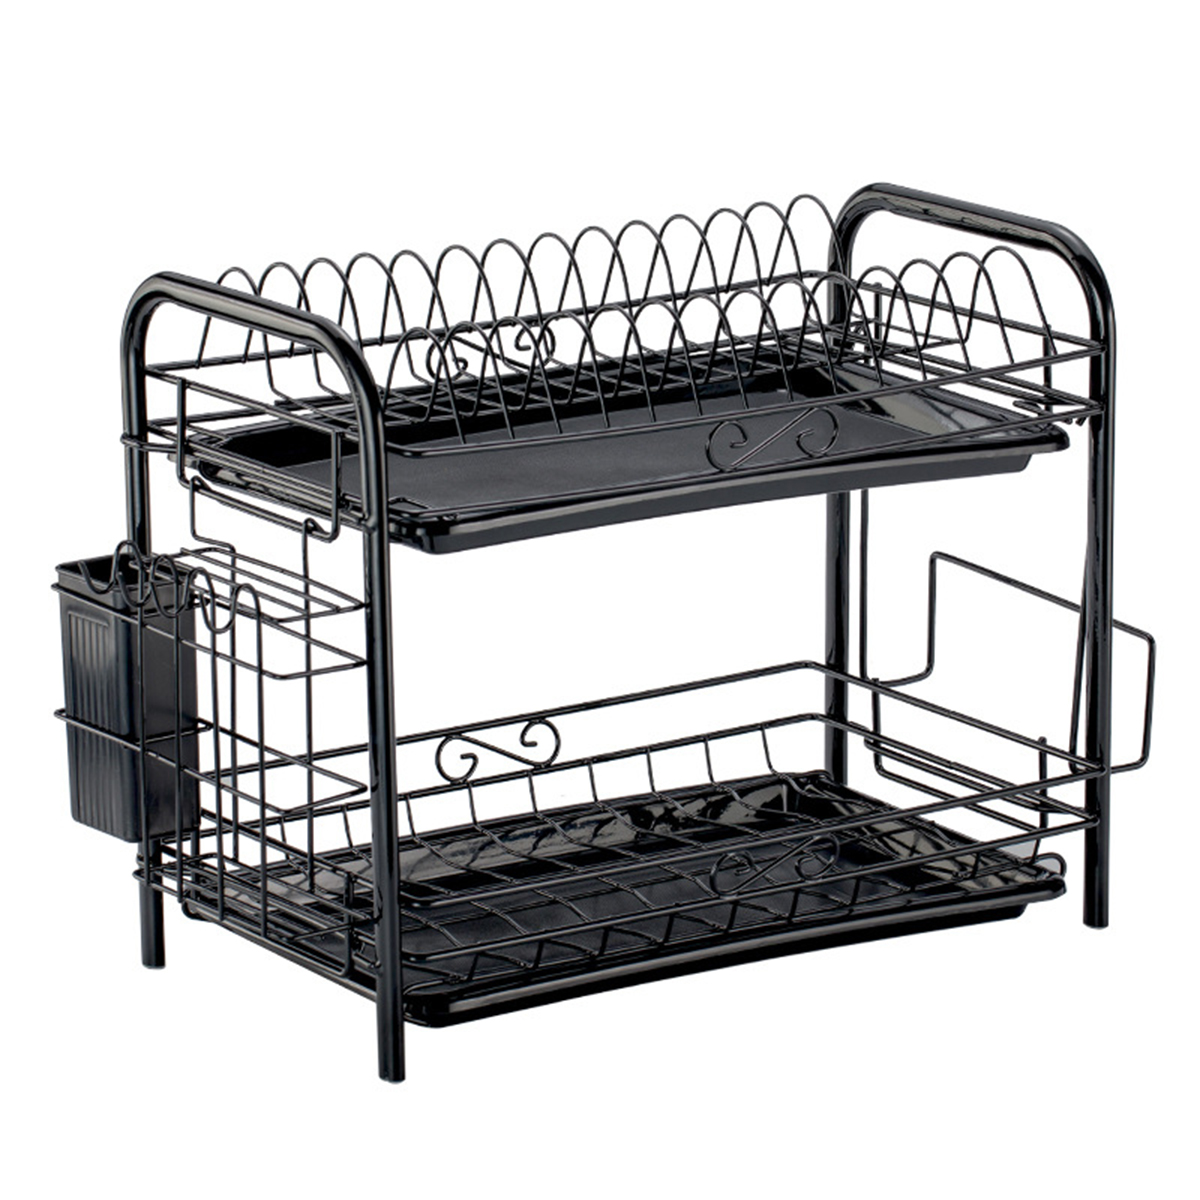 23-Tiers-Dish-Drainer-Holder-Metal-Drying-Rack-Basket-Bowl-Dish-Draining-Shelf-Dryer-Tray-Holder-Kit-1732659-8